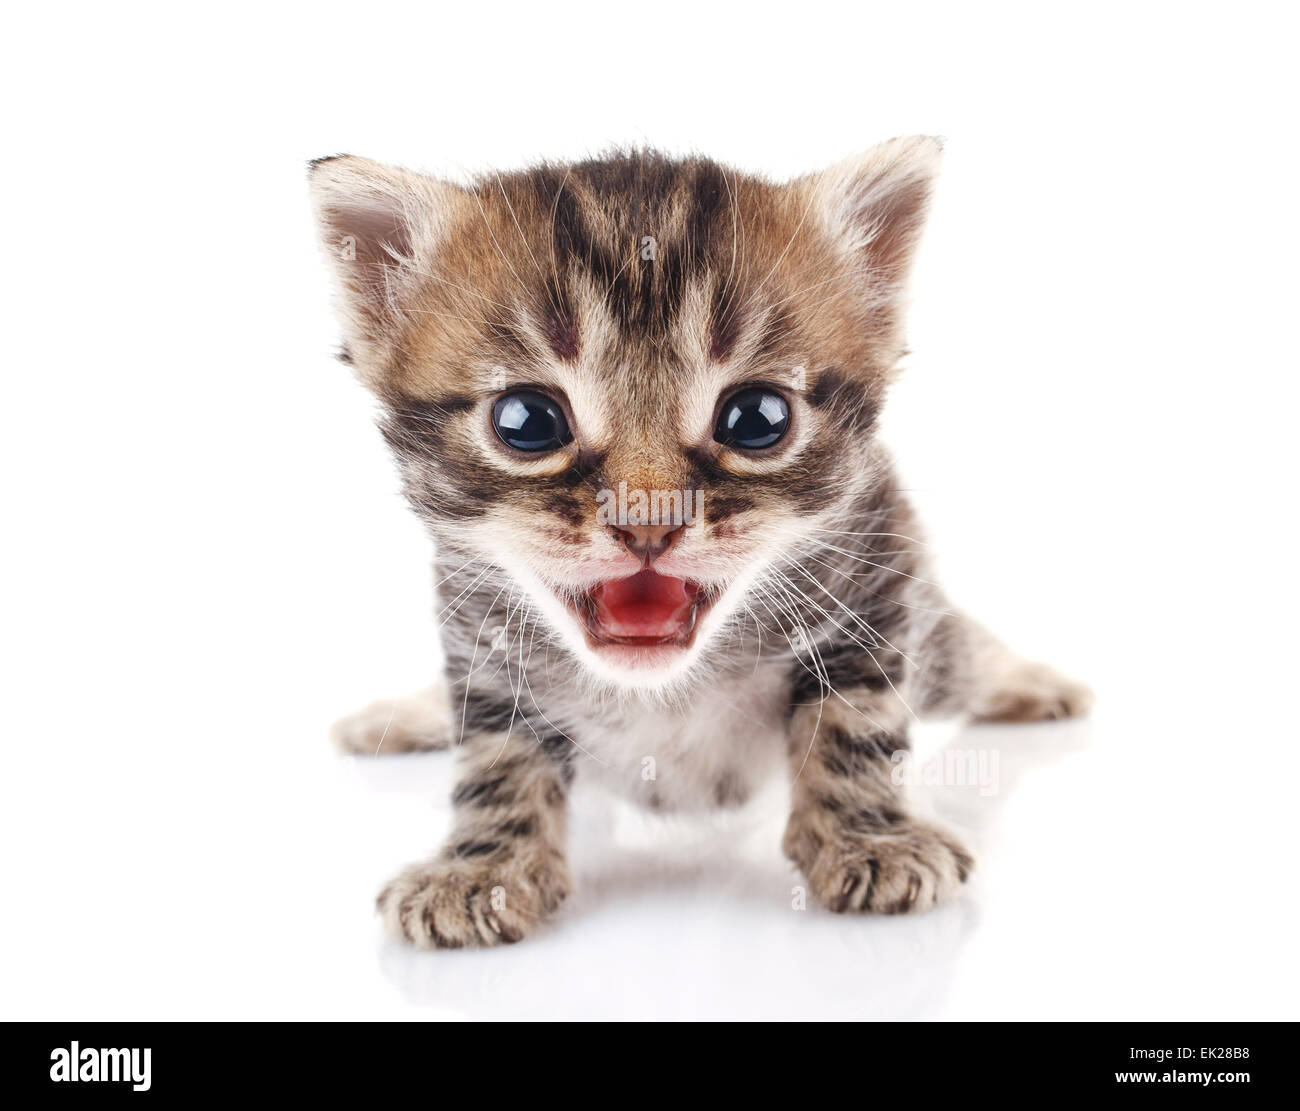 striped kitten crying Stock Photo